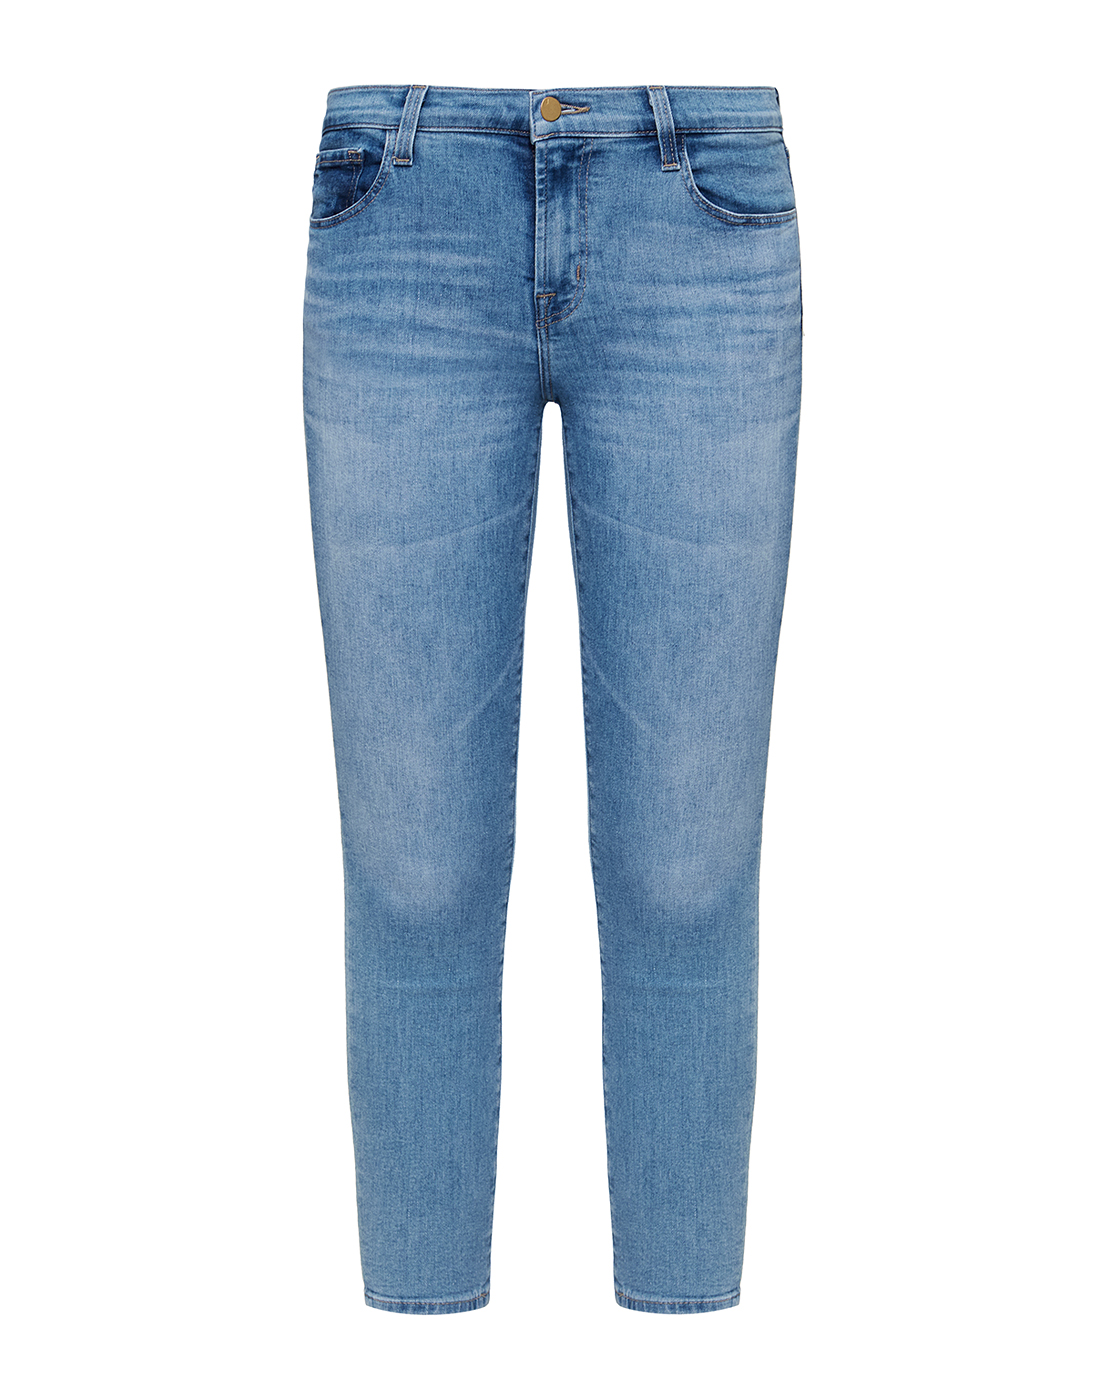 Женские голубые джинсы J BRAND SJB002231/A-1